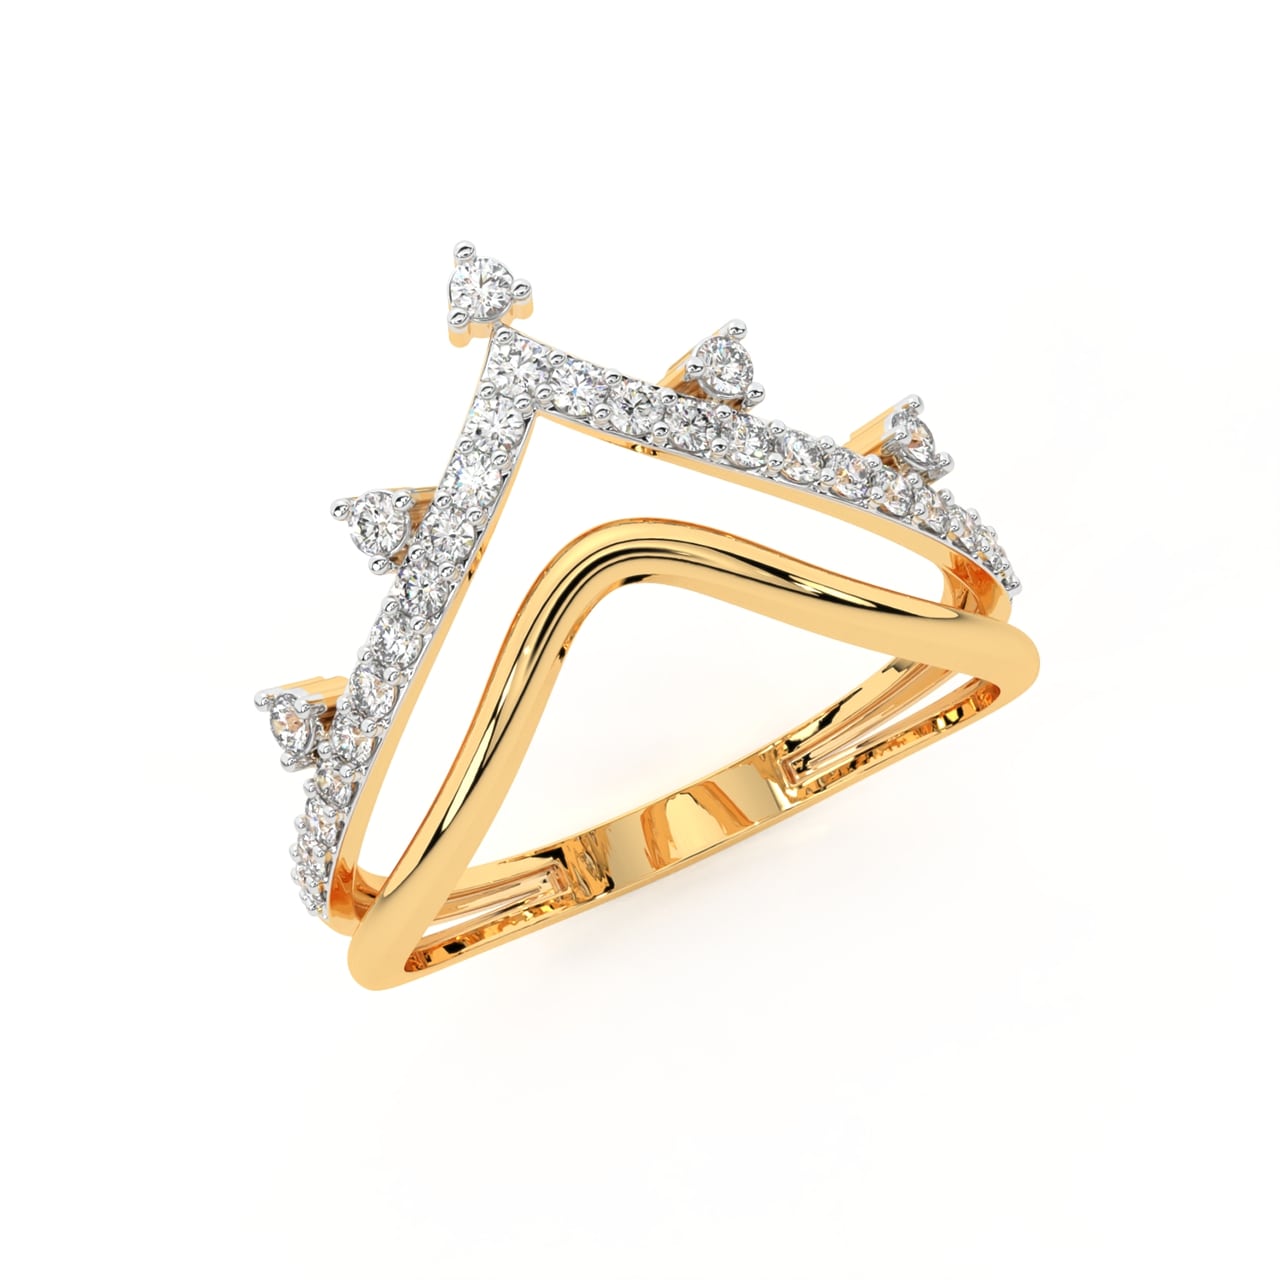 Tivon Round Diamond Engagement Ring